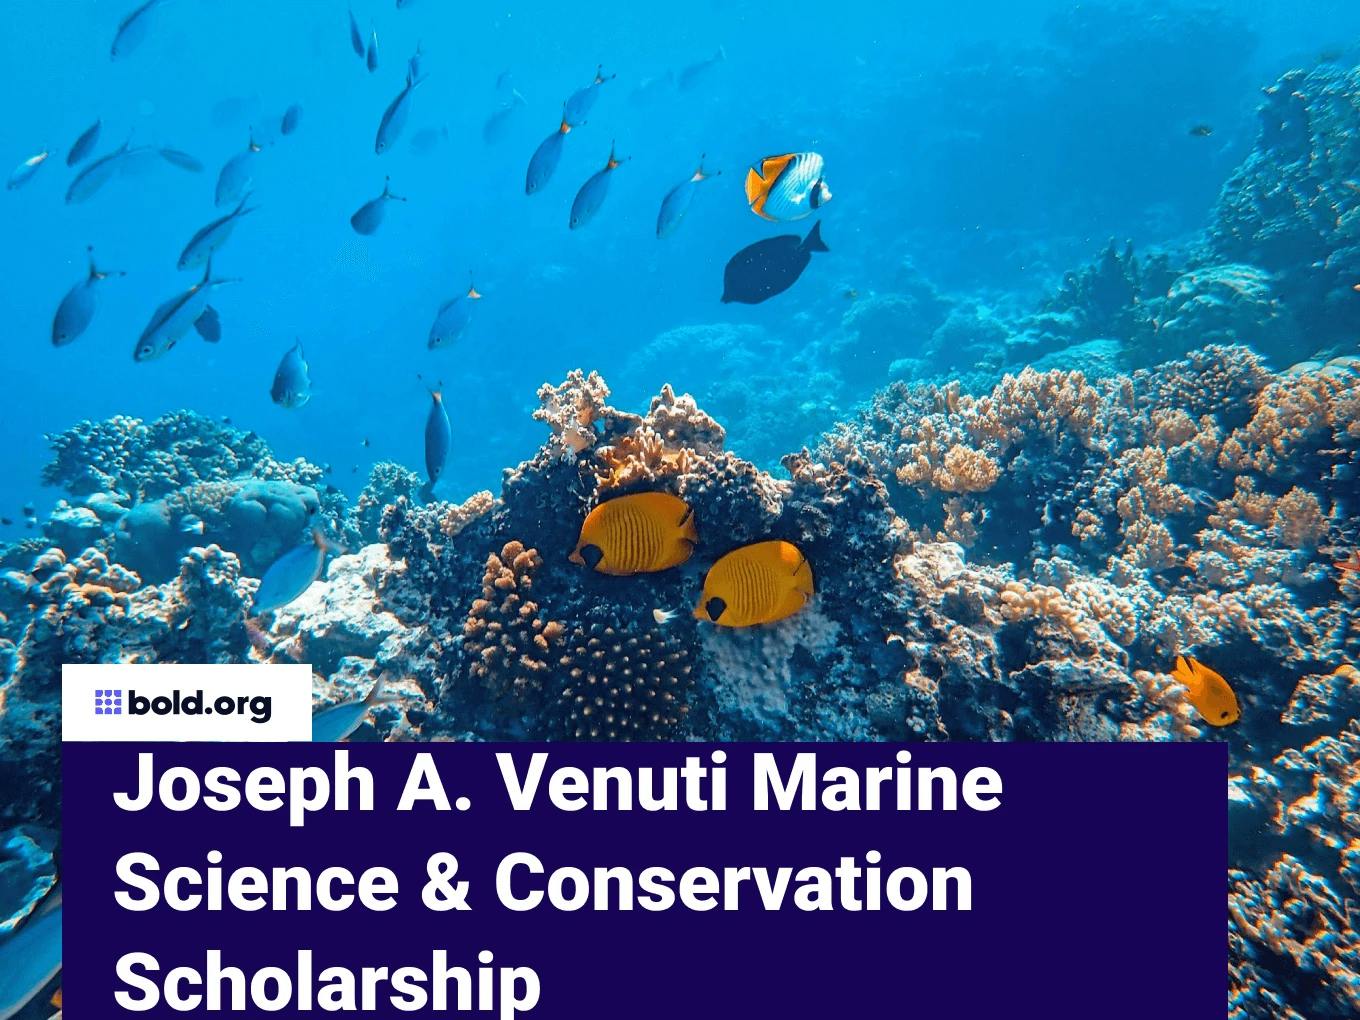 Joseph A. Venuti Marine Science & Conservation Scholarship